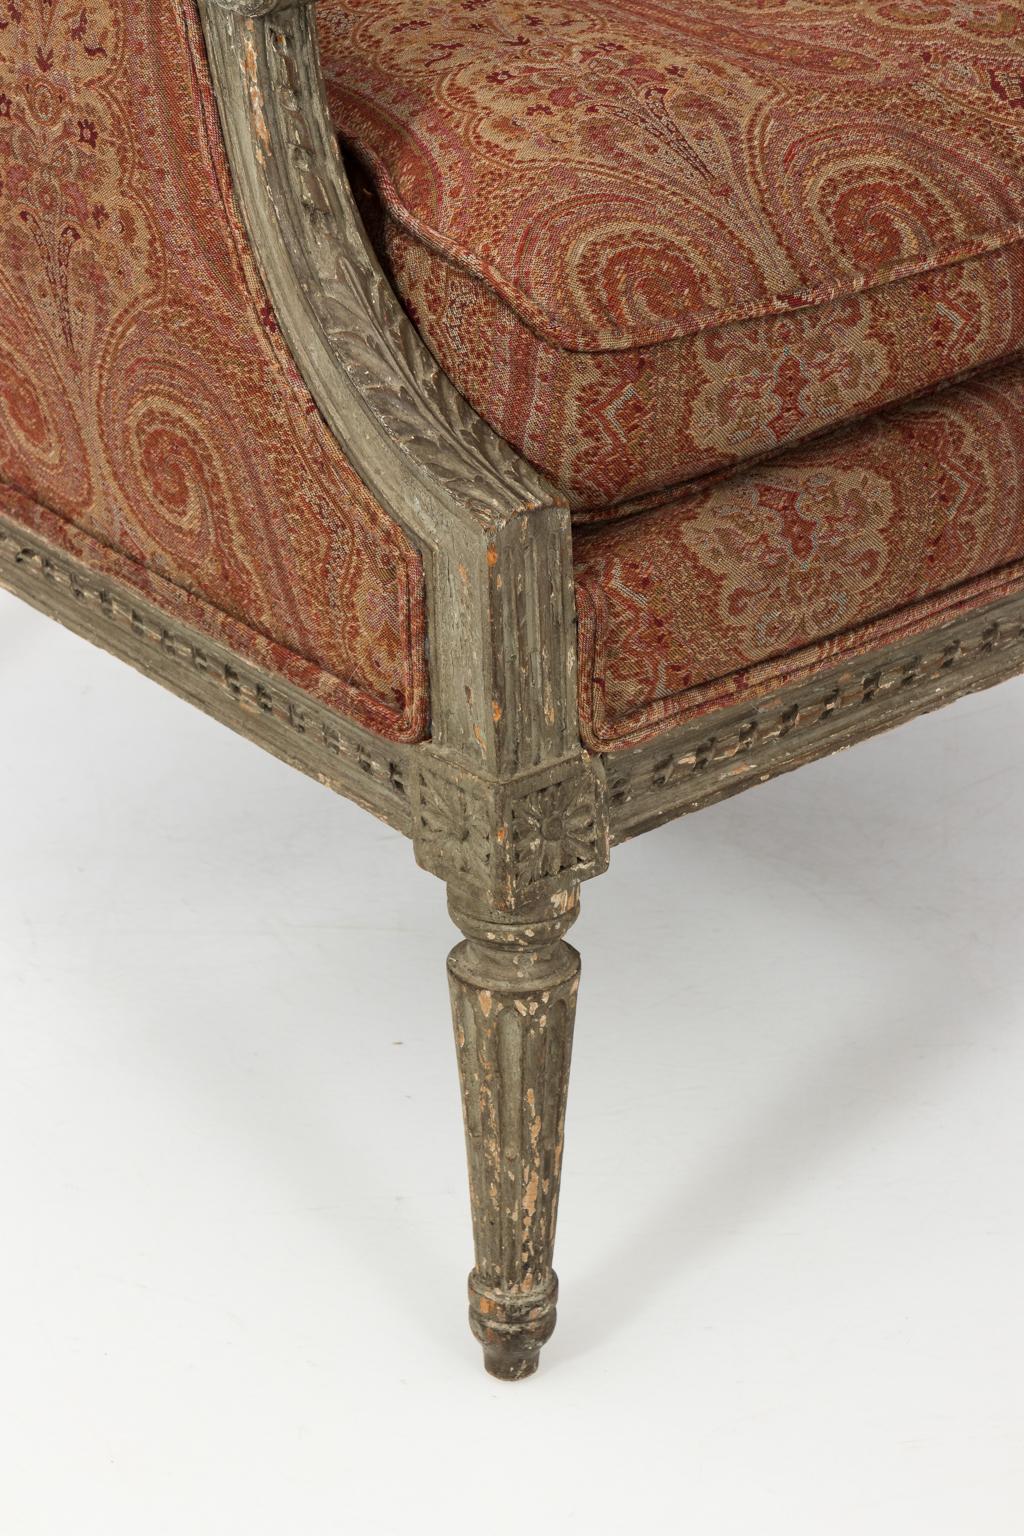 20th Century Louis XVI Style Wing Chair, circa 1920s